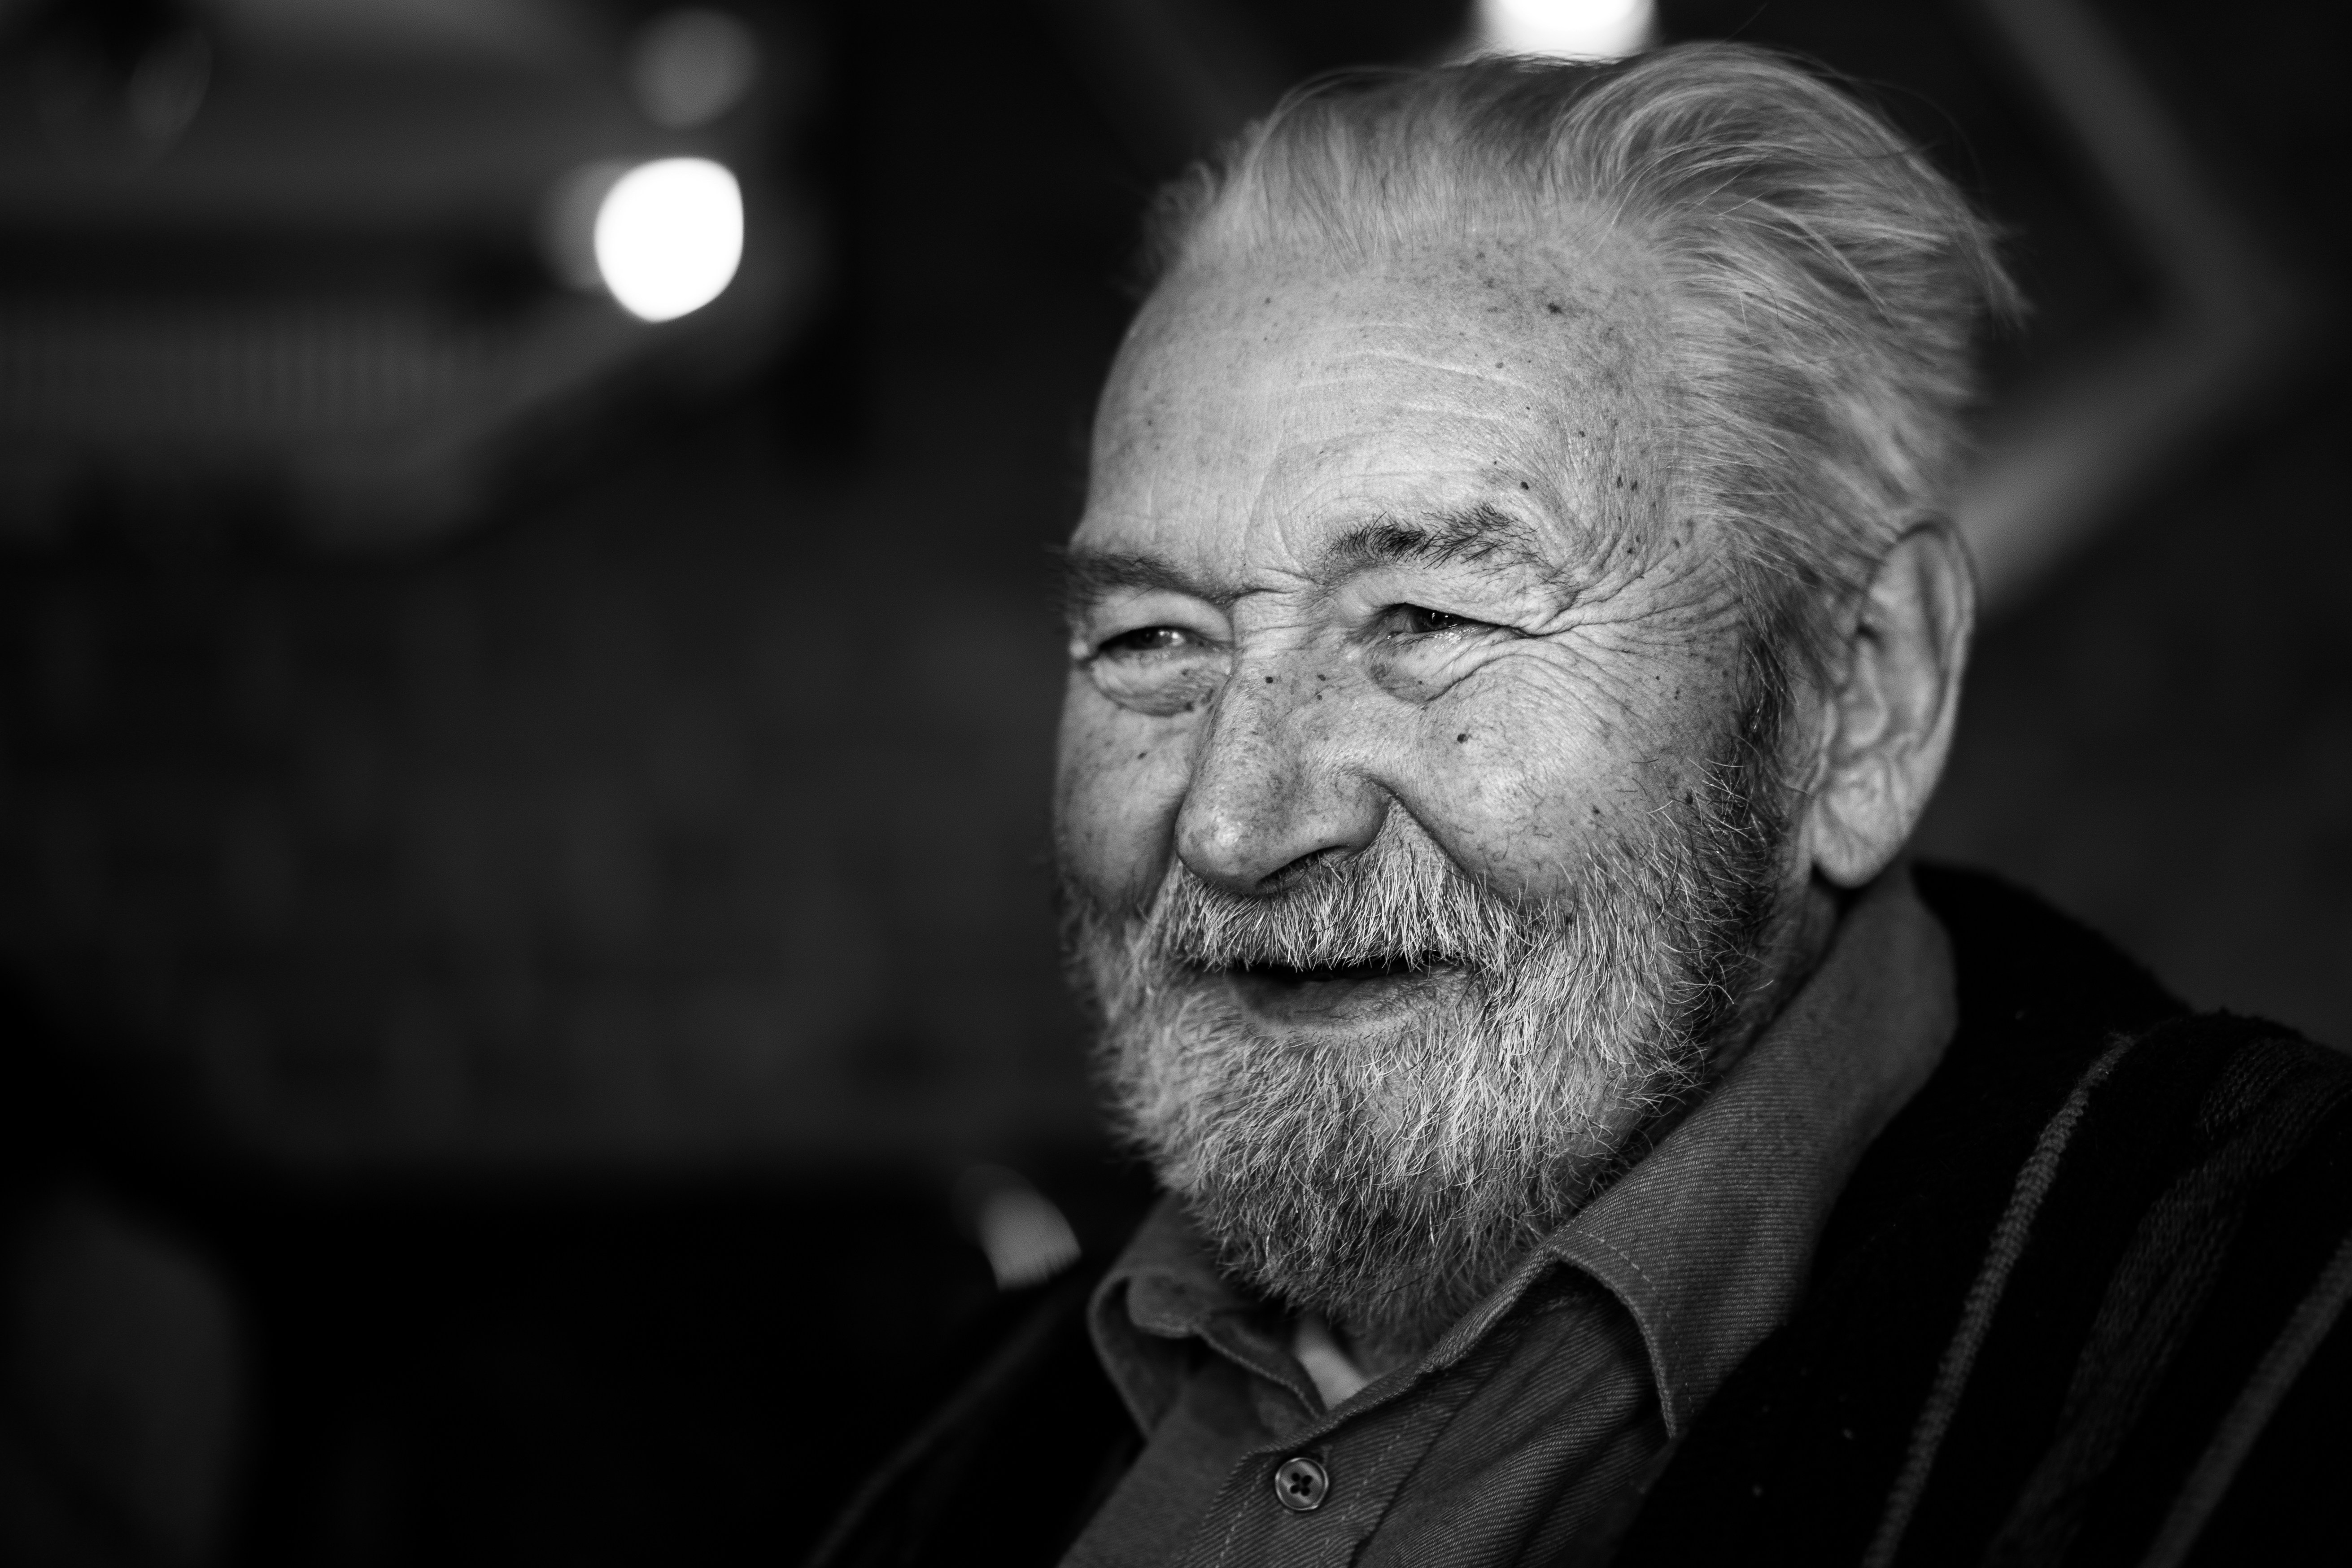 A happy old man | Source: Unsplash